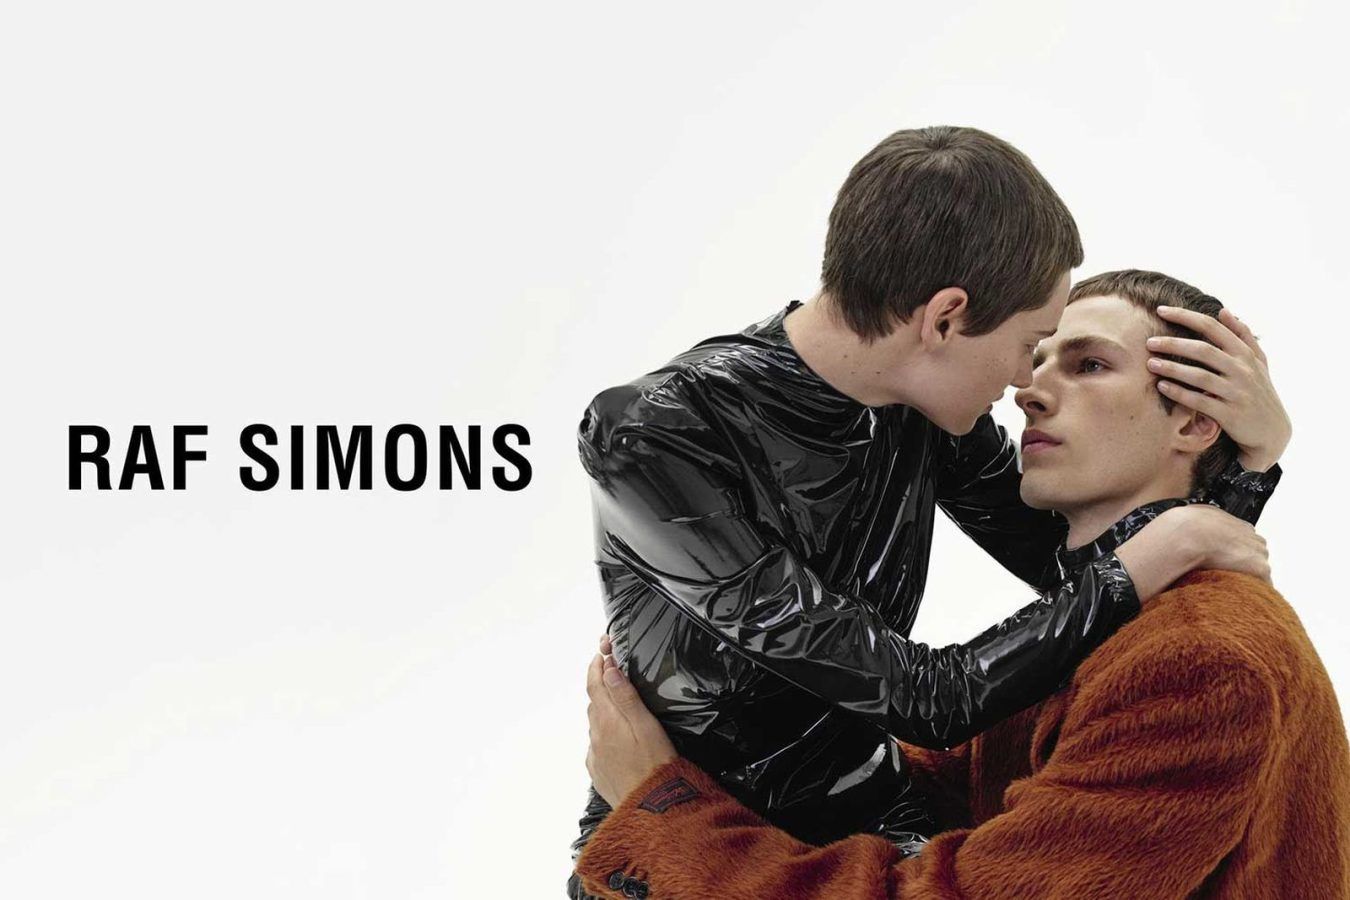 Raf Simons is closing down his eponymous fashion label